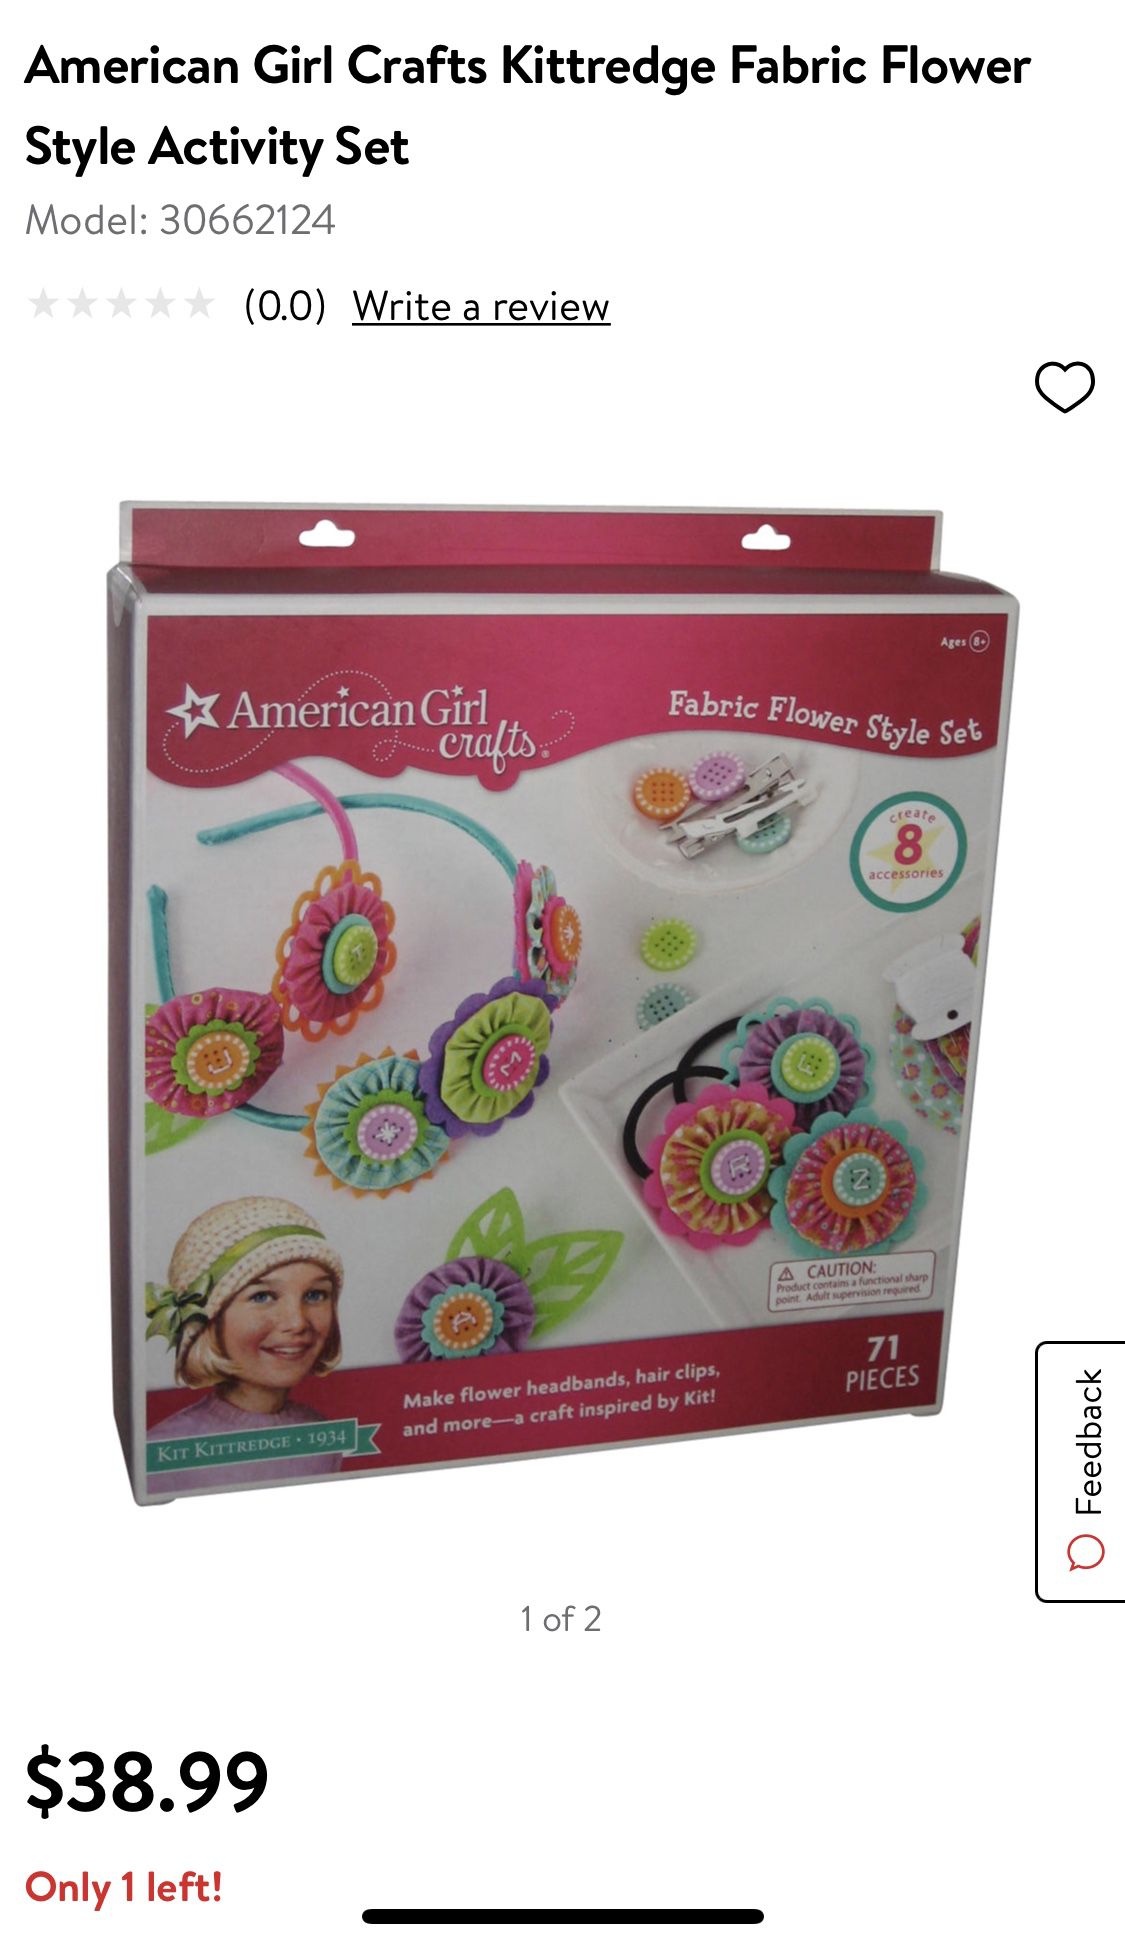 American Girl Crafts Kittredge Fabric Flower Style Activity Set